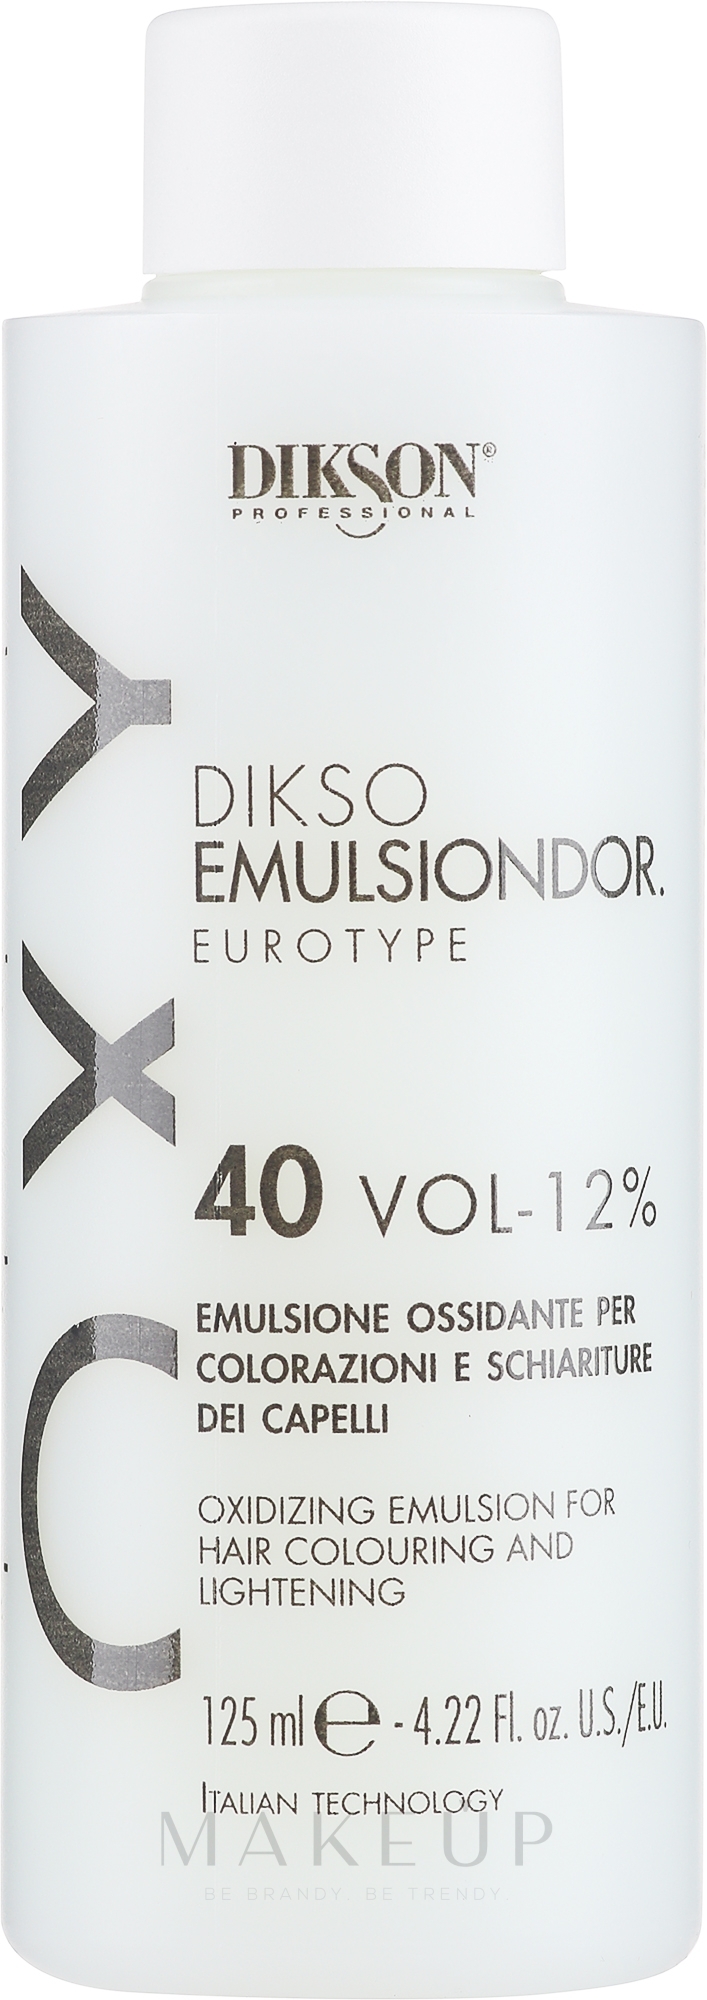 Entwicklerlotion 40 Vol (12%) - Dikson Tec Emulsiondor Eurotype 40 Volumi — Bild 125 ml